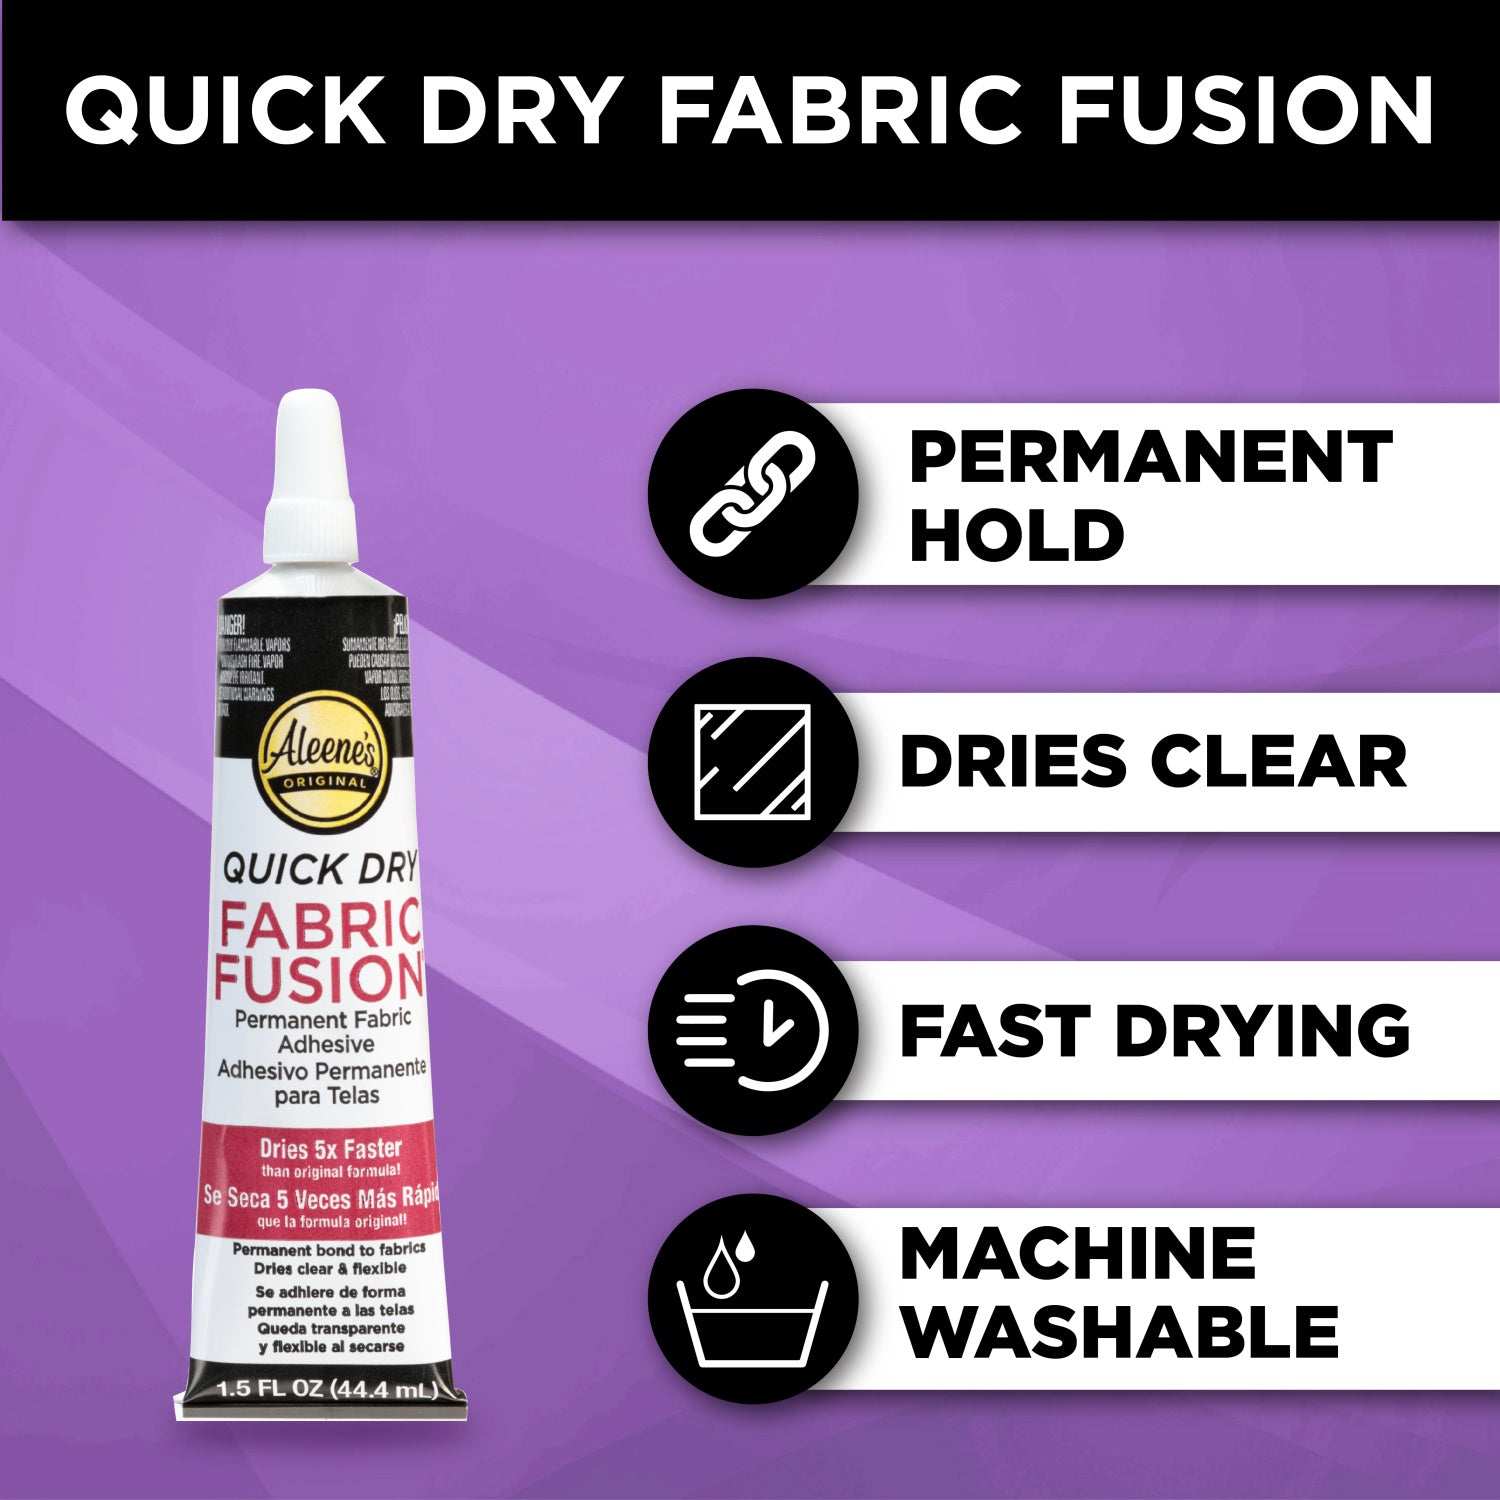 Aleene’s Quick Dry Fabric Fusion